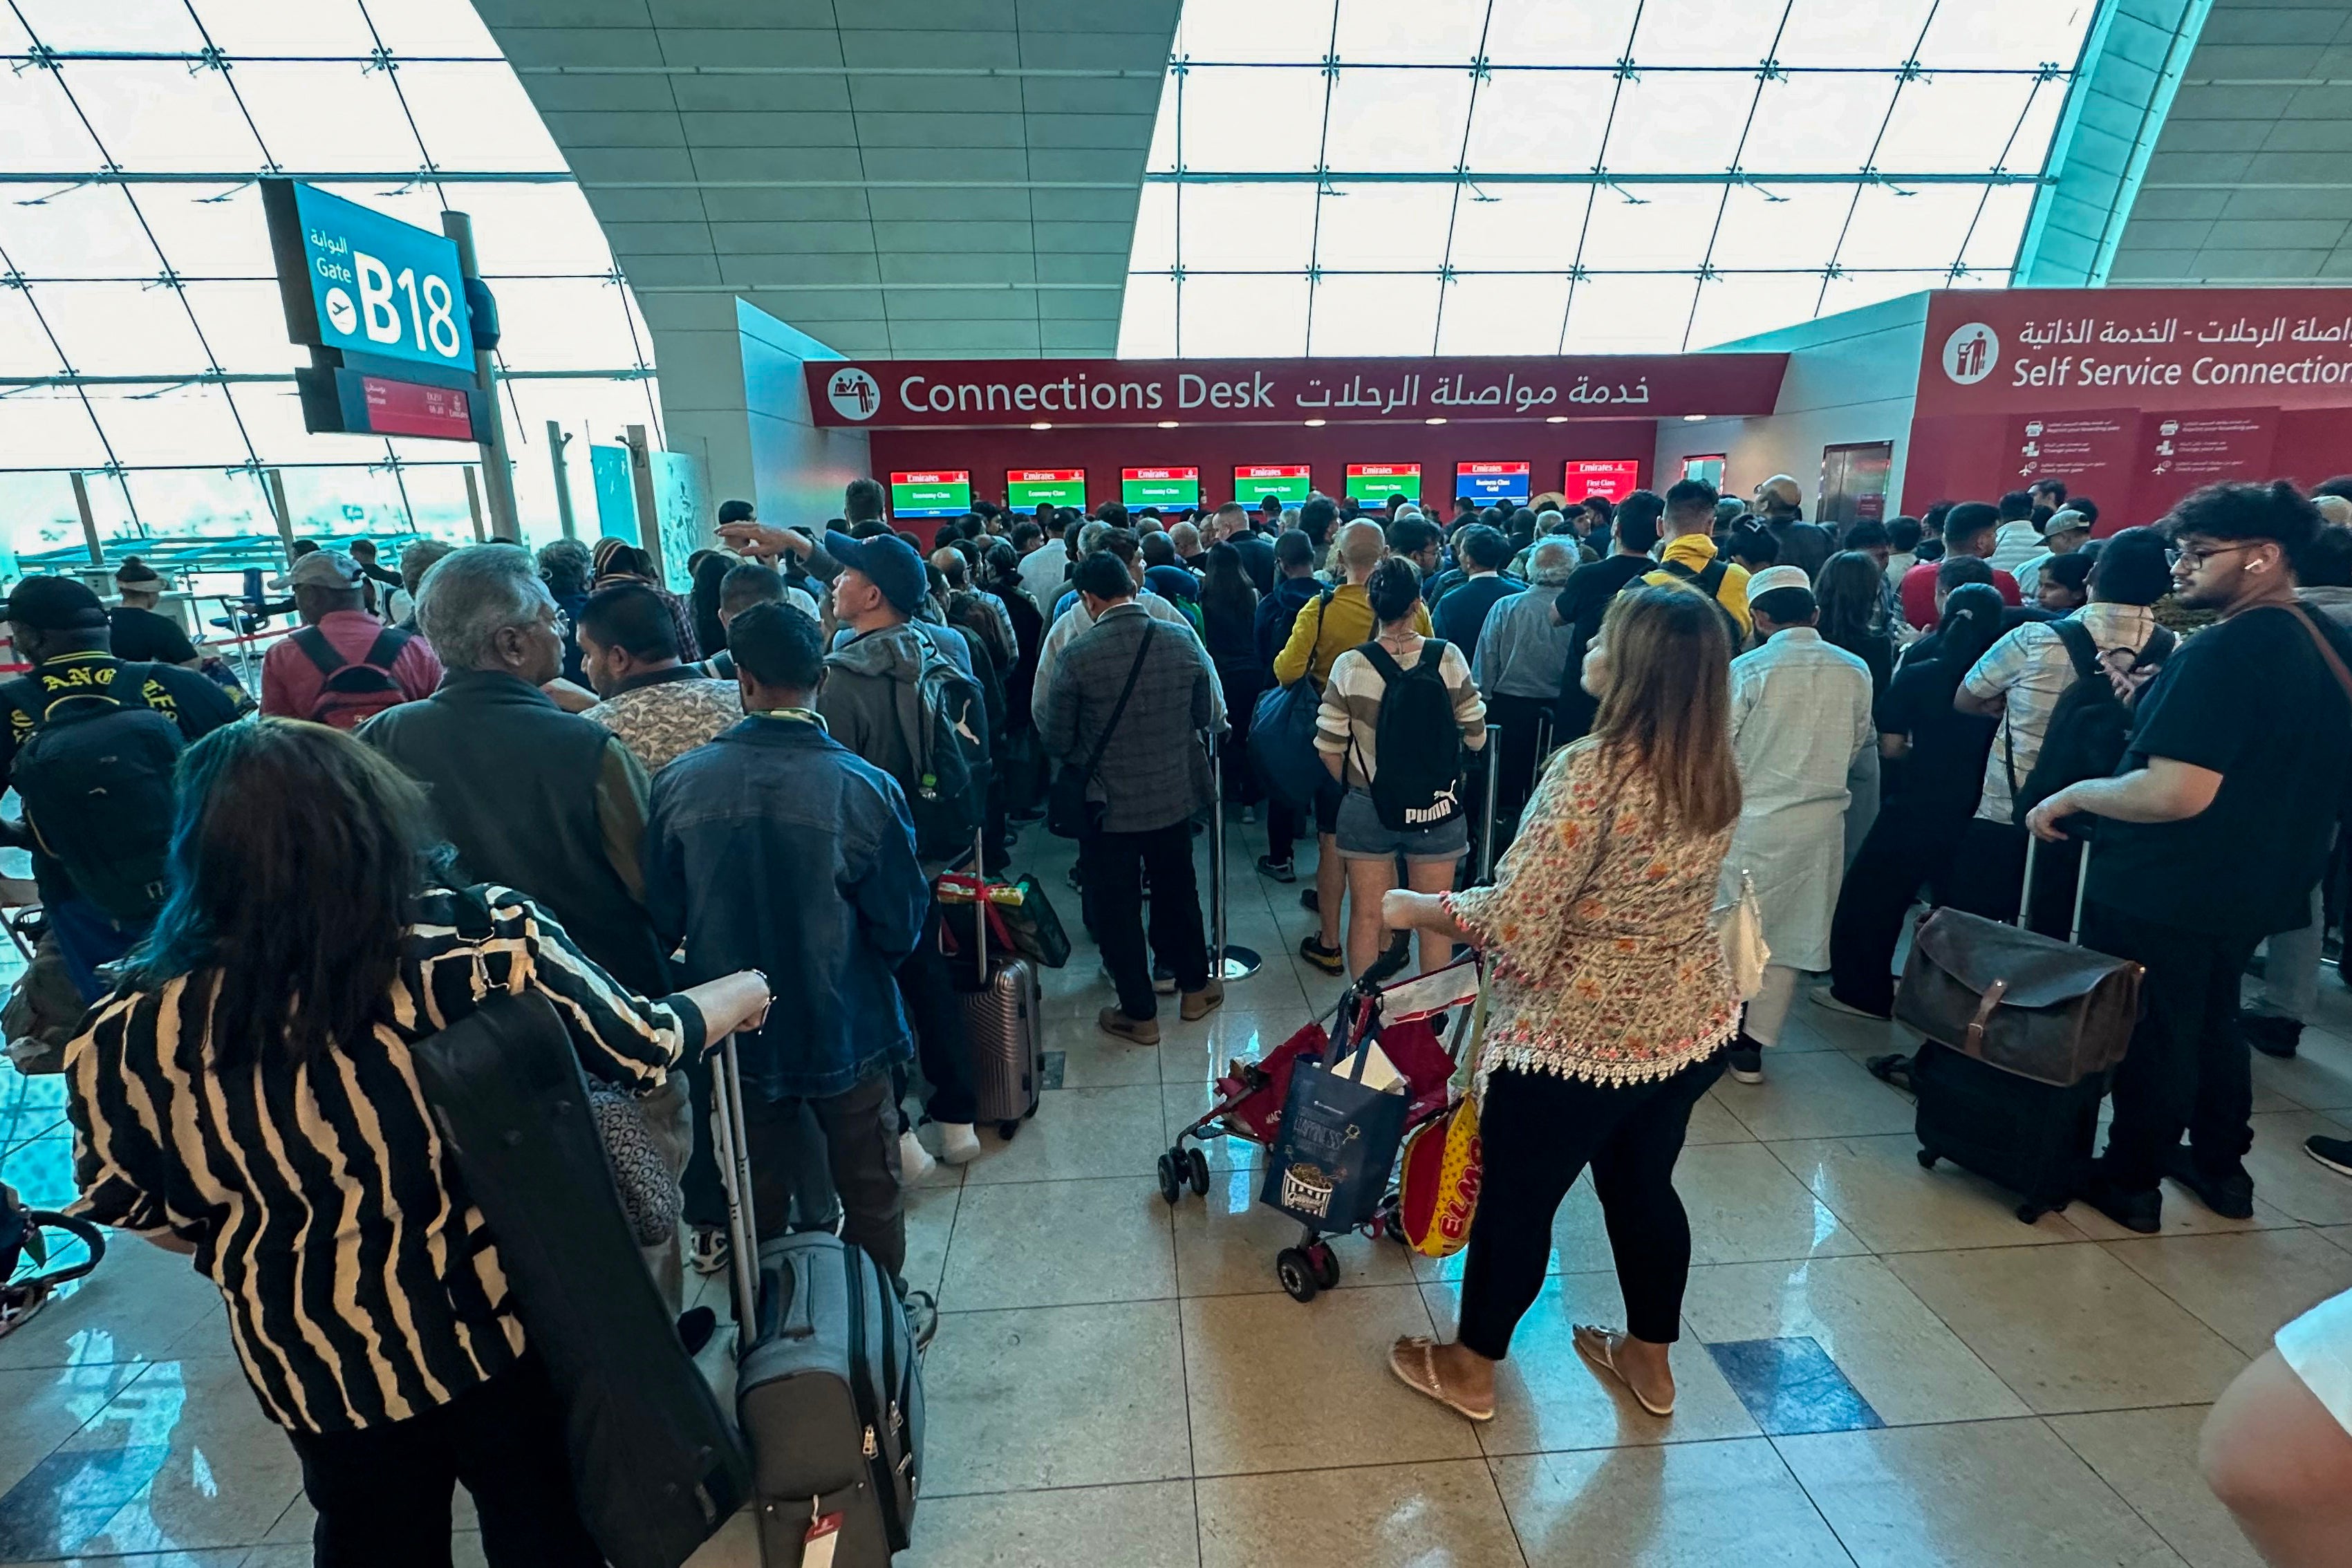 Passengers queue at a flight connection desk at the Dubai International Airport in Dubai